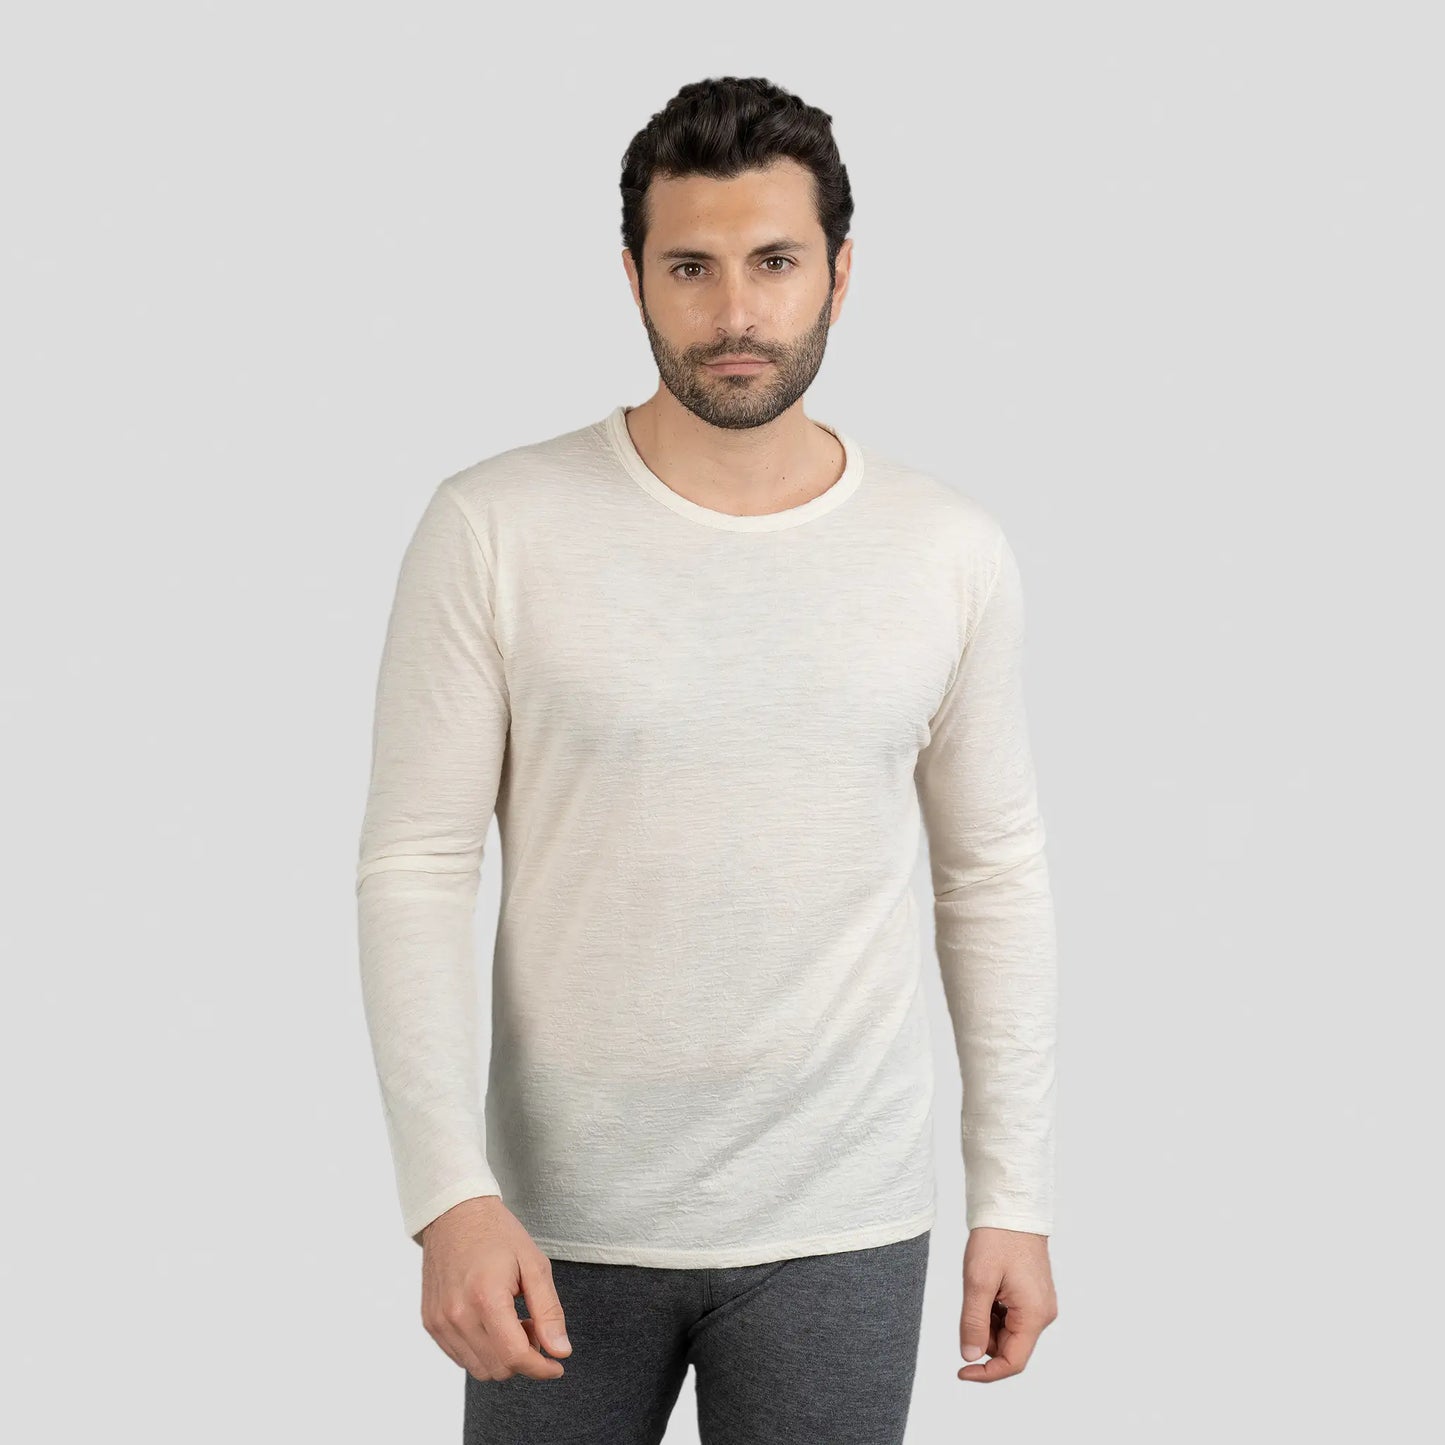 mens warmest long sleeve tshirt color Natural White